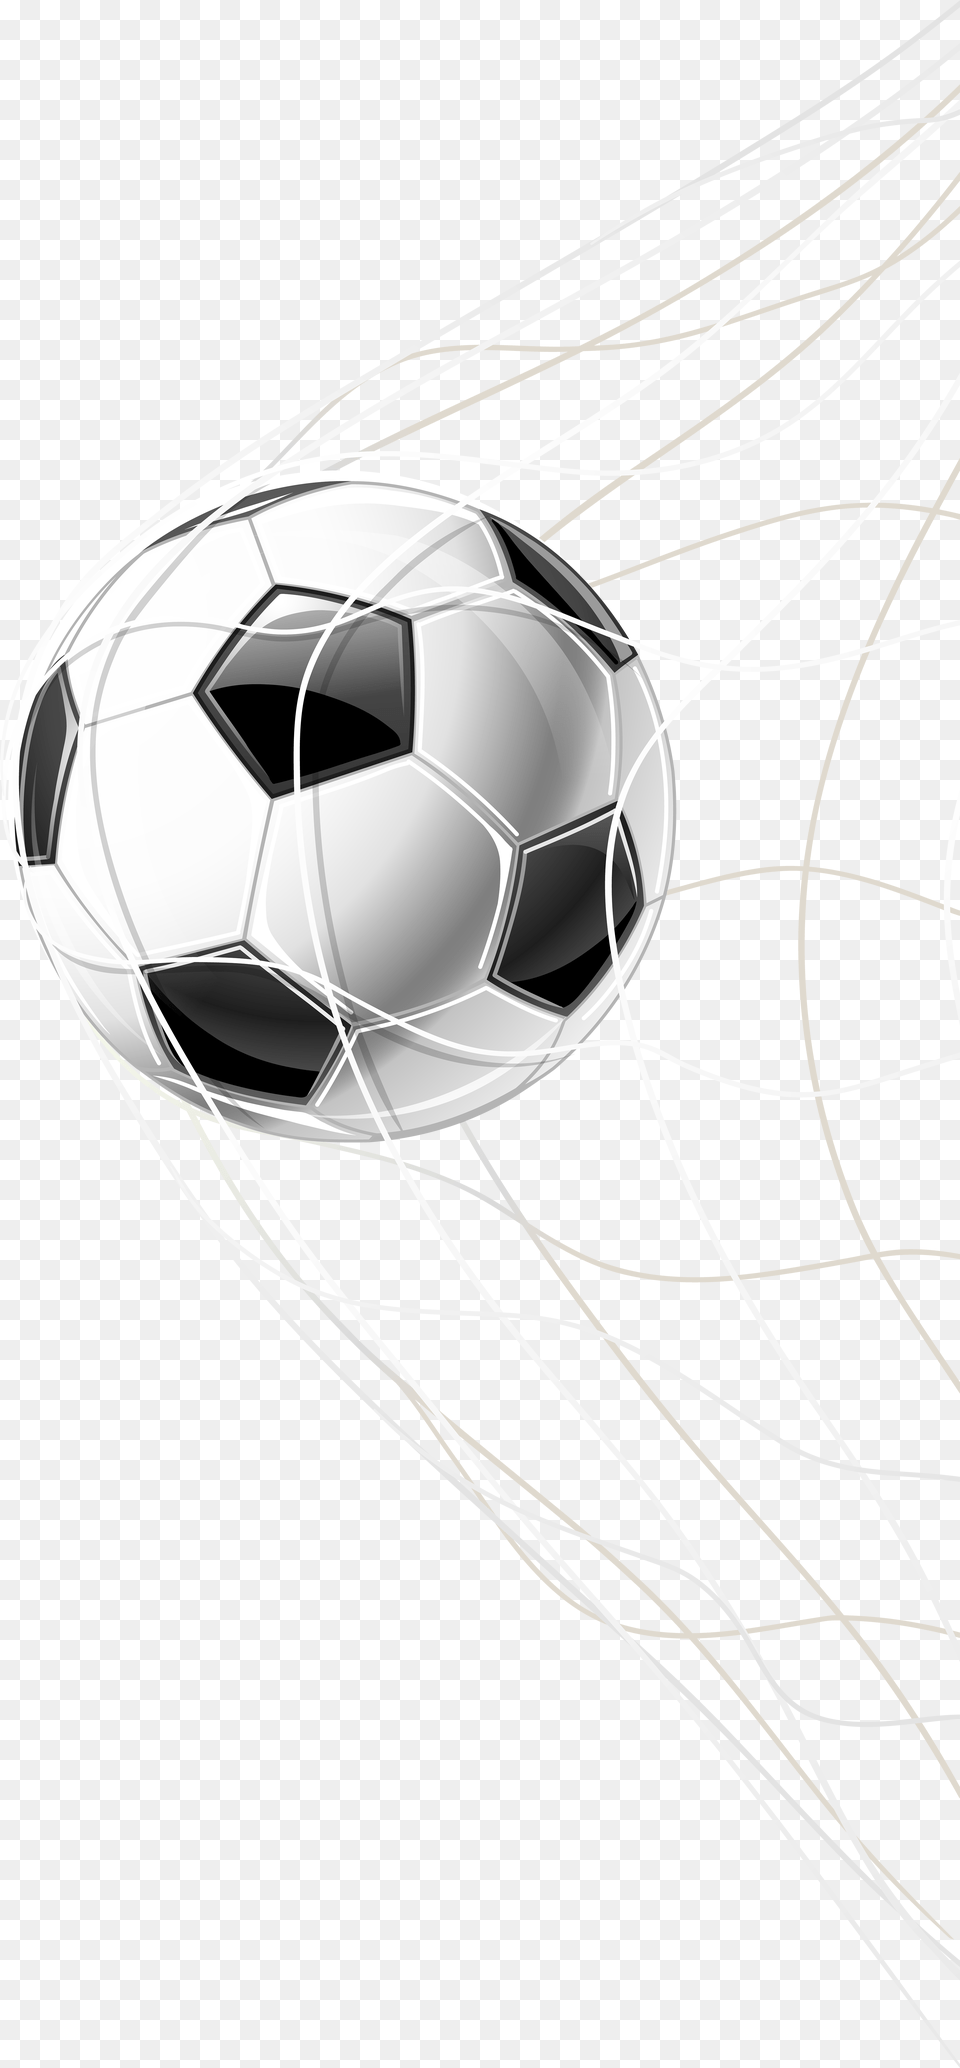 Goal Clipart Football Net Transparent Portable Network Graphics, Ball, Soccer, Soccer Ball, Sport Png Image